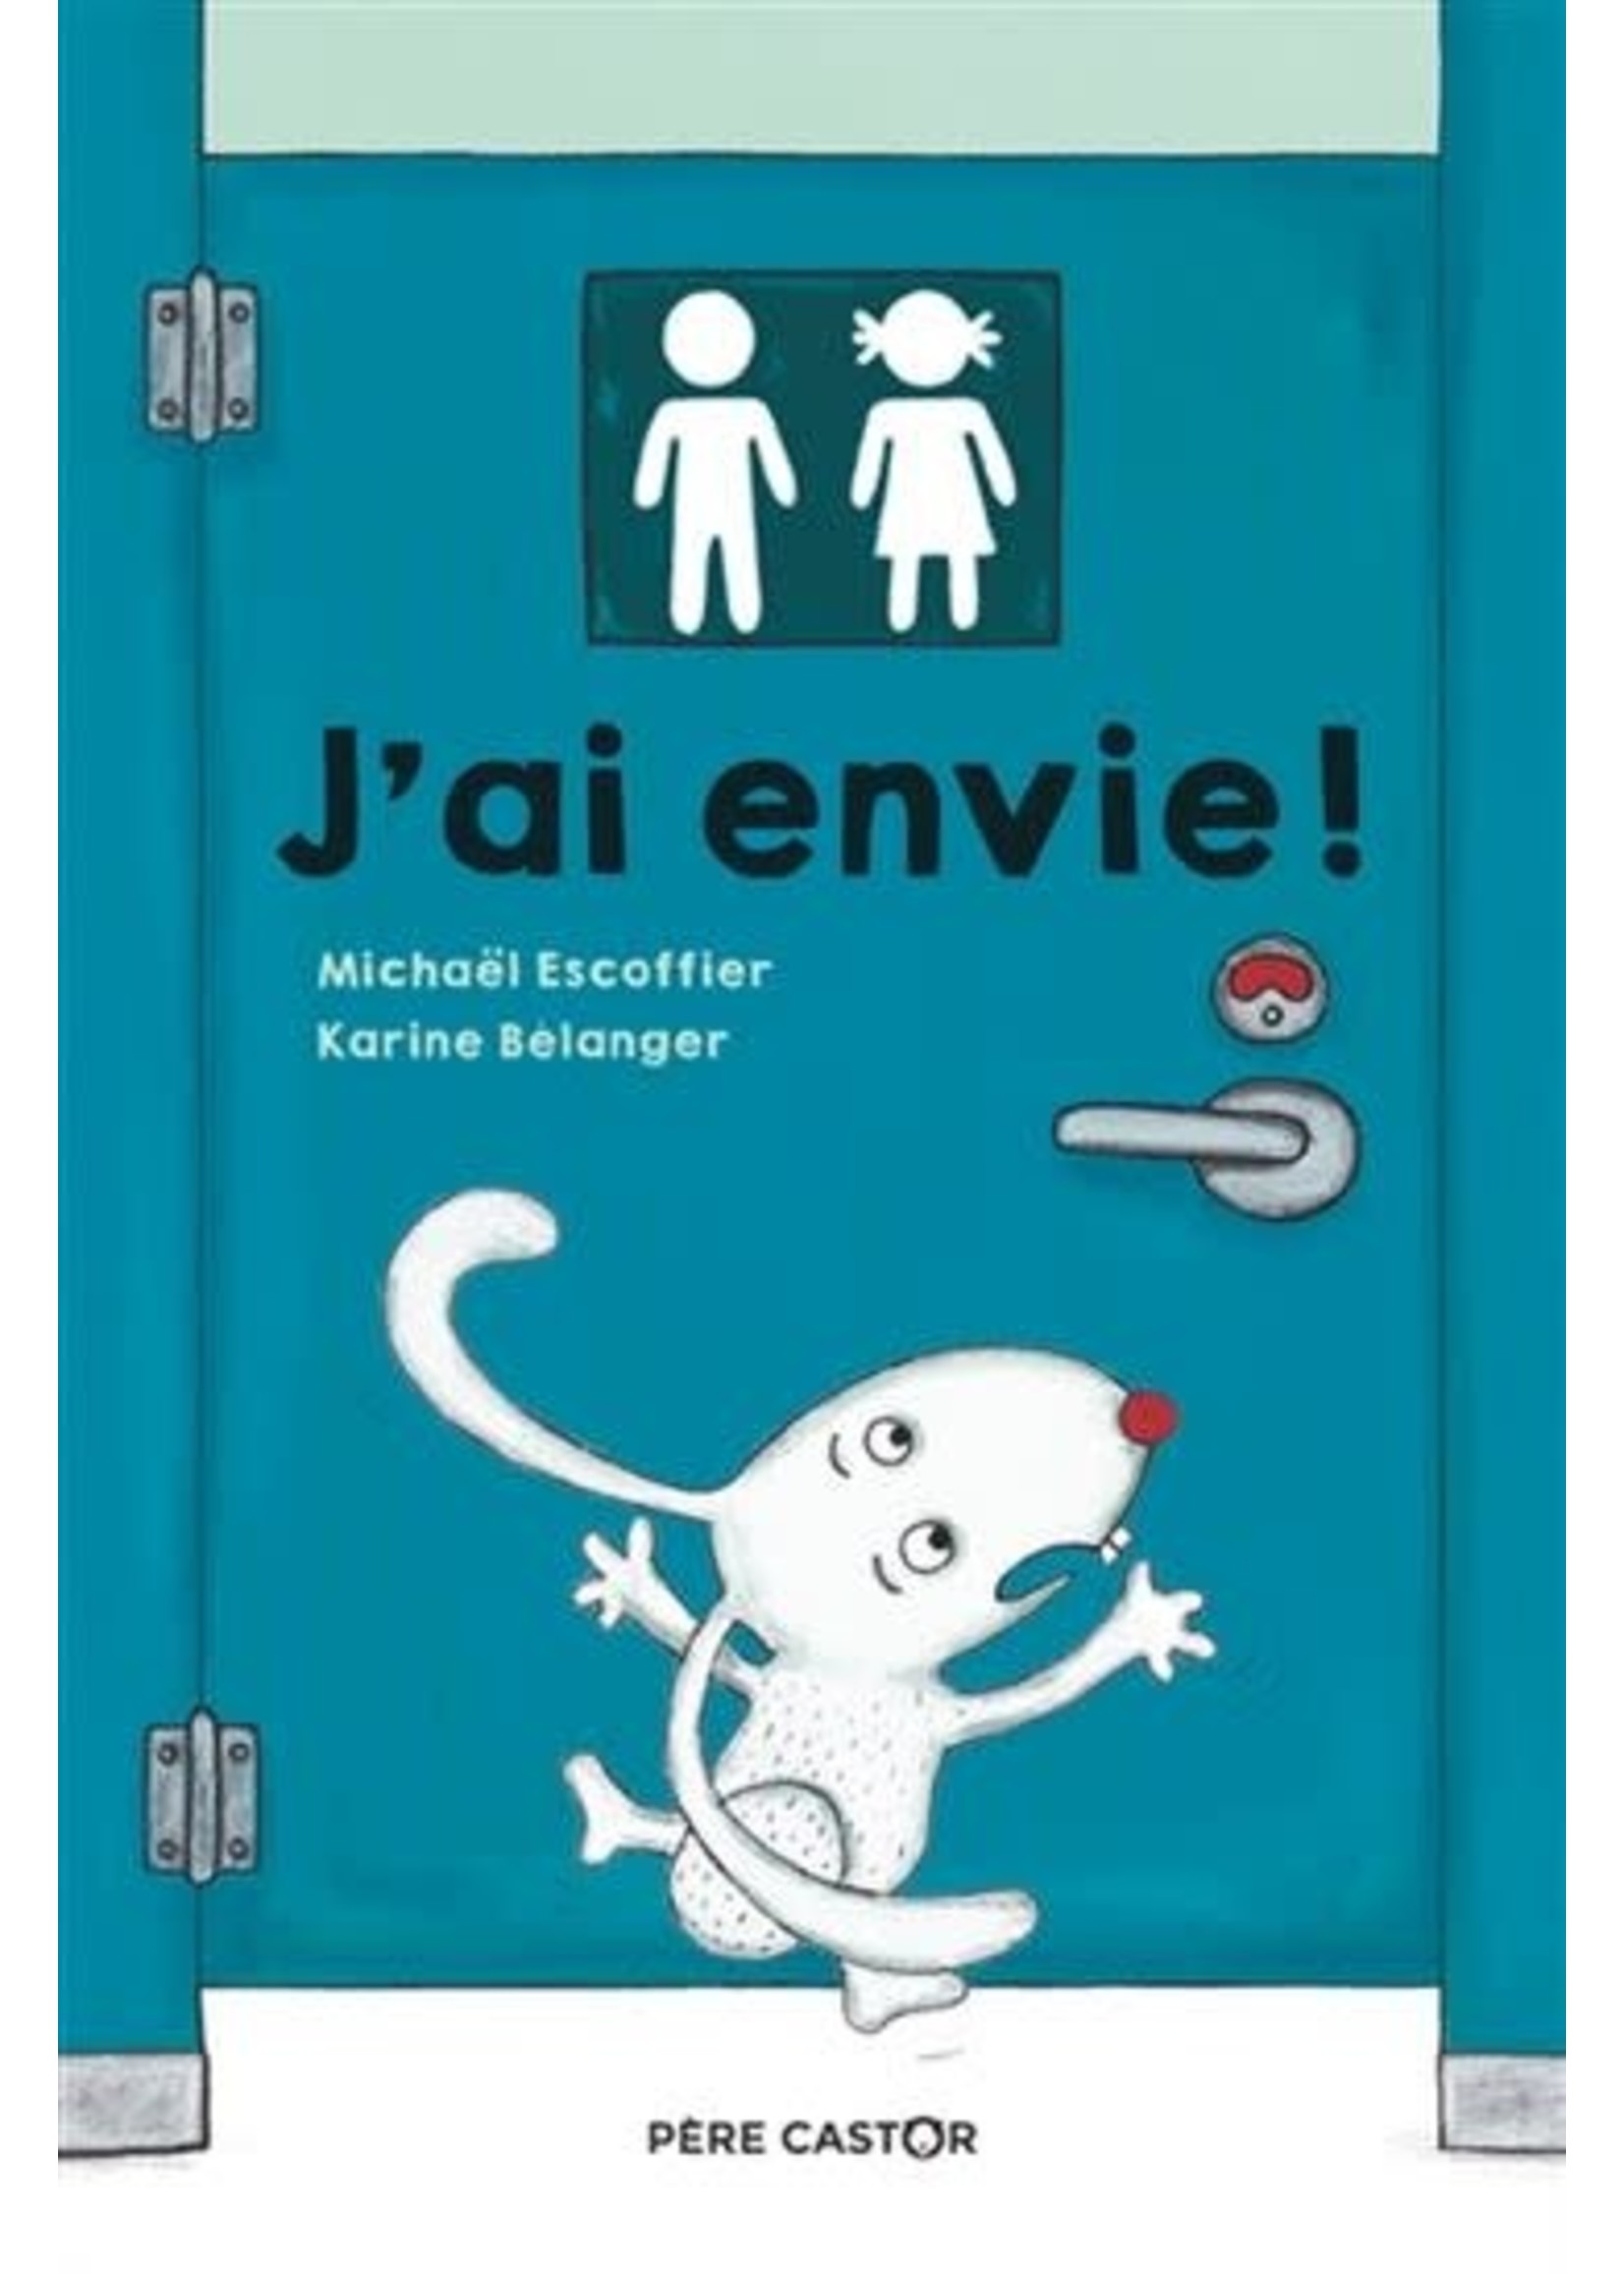 J'ai envie! by Michaël Escoffier, Karine Bélanger